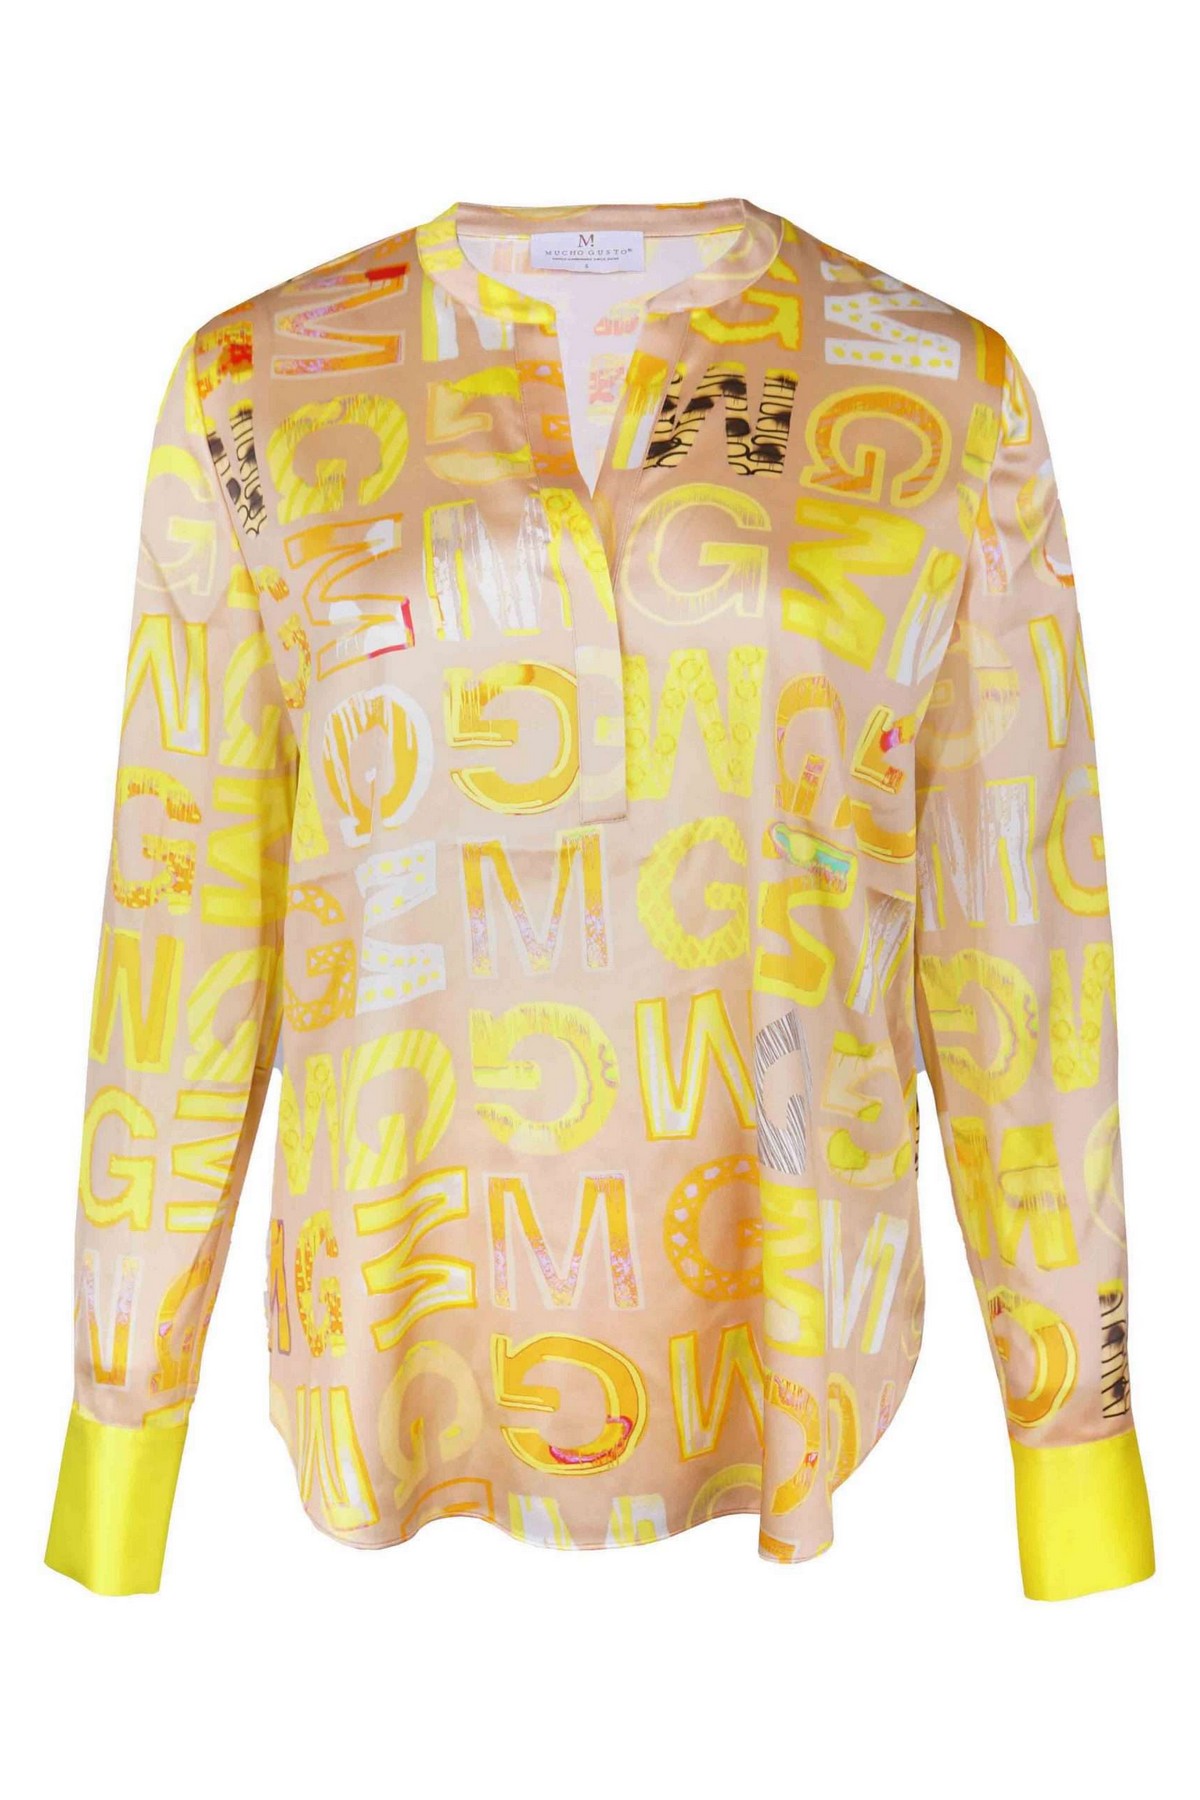 Shirtbloes print MG in de kleur geel oker van het merk Mucho Gusto